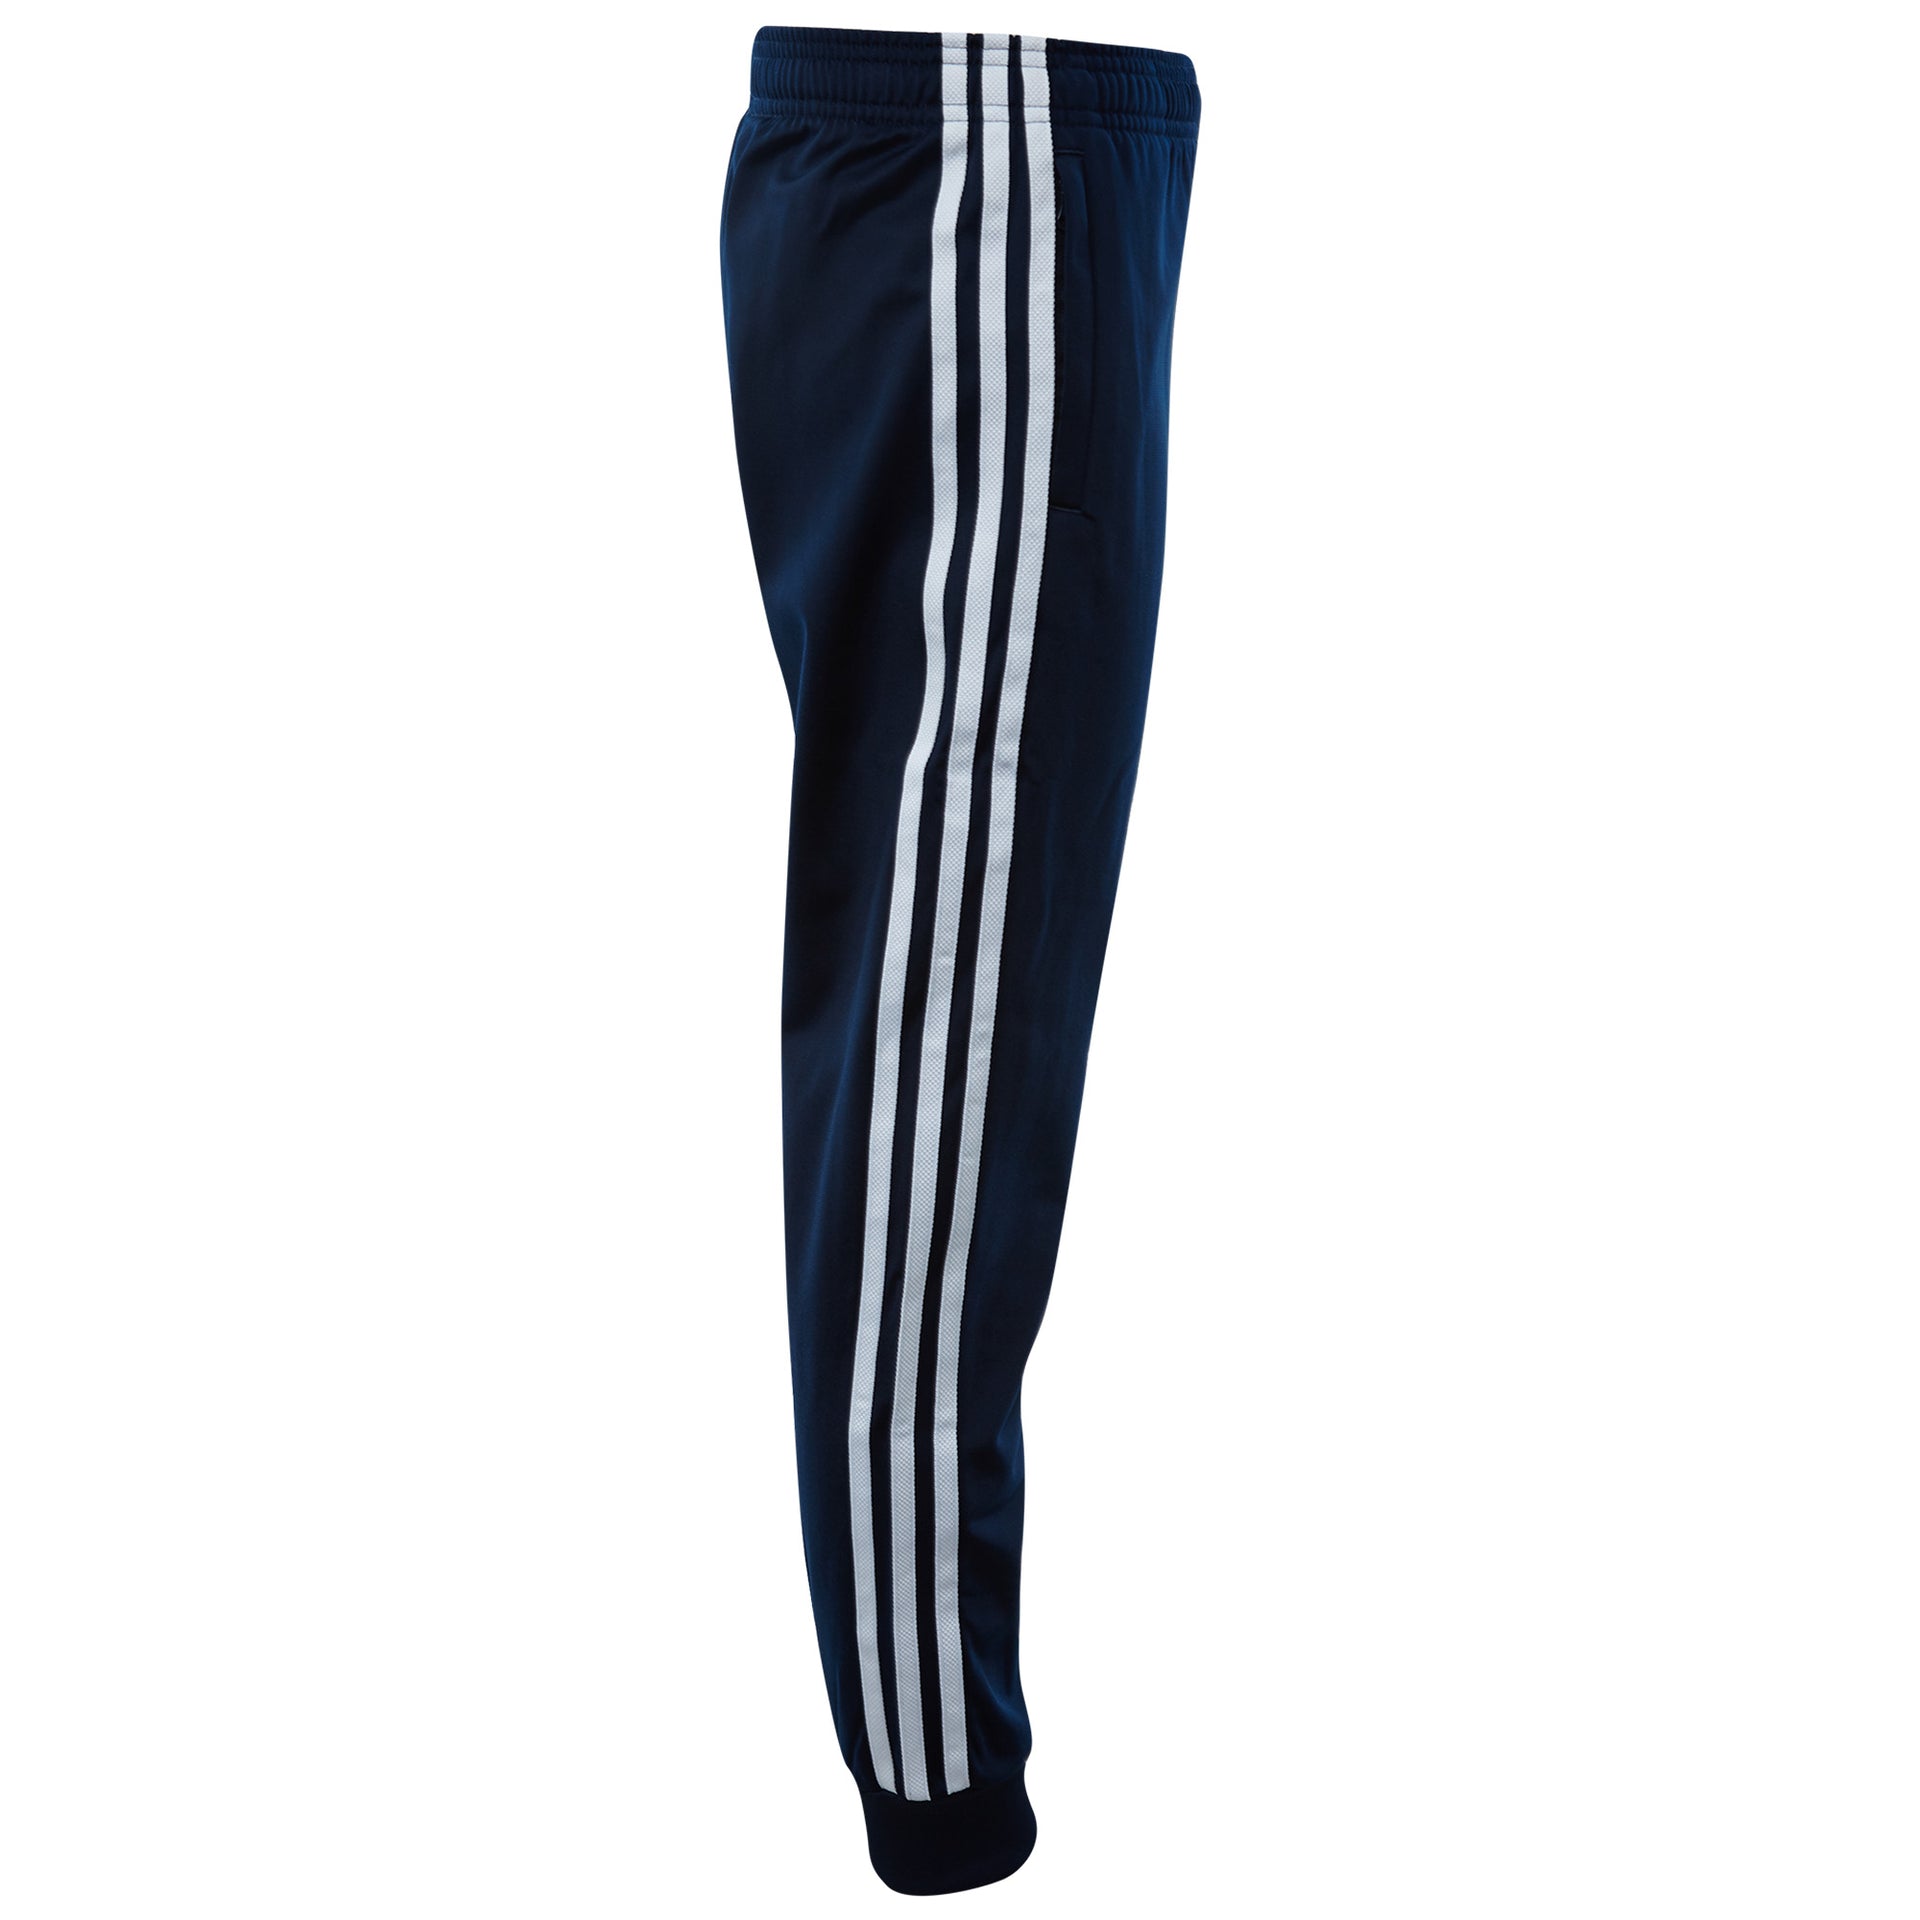 Adidas Sst Pants Big Kids Style : Cf8563-CONAVY